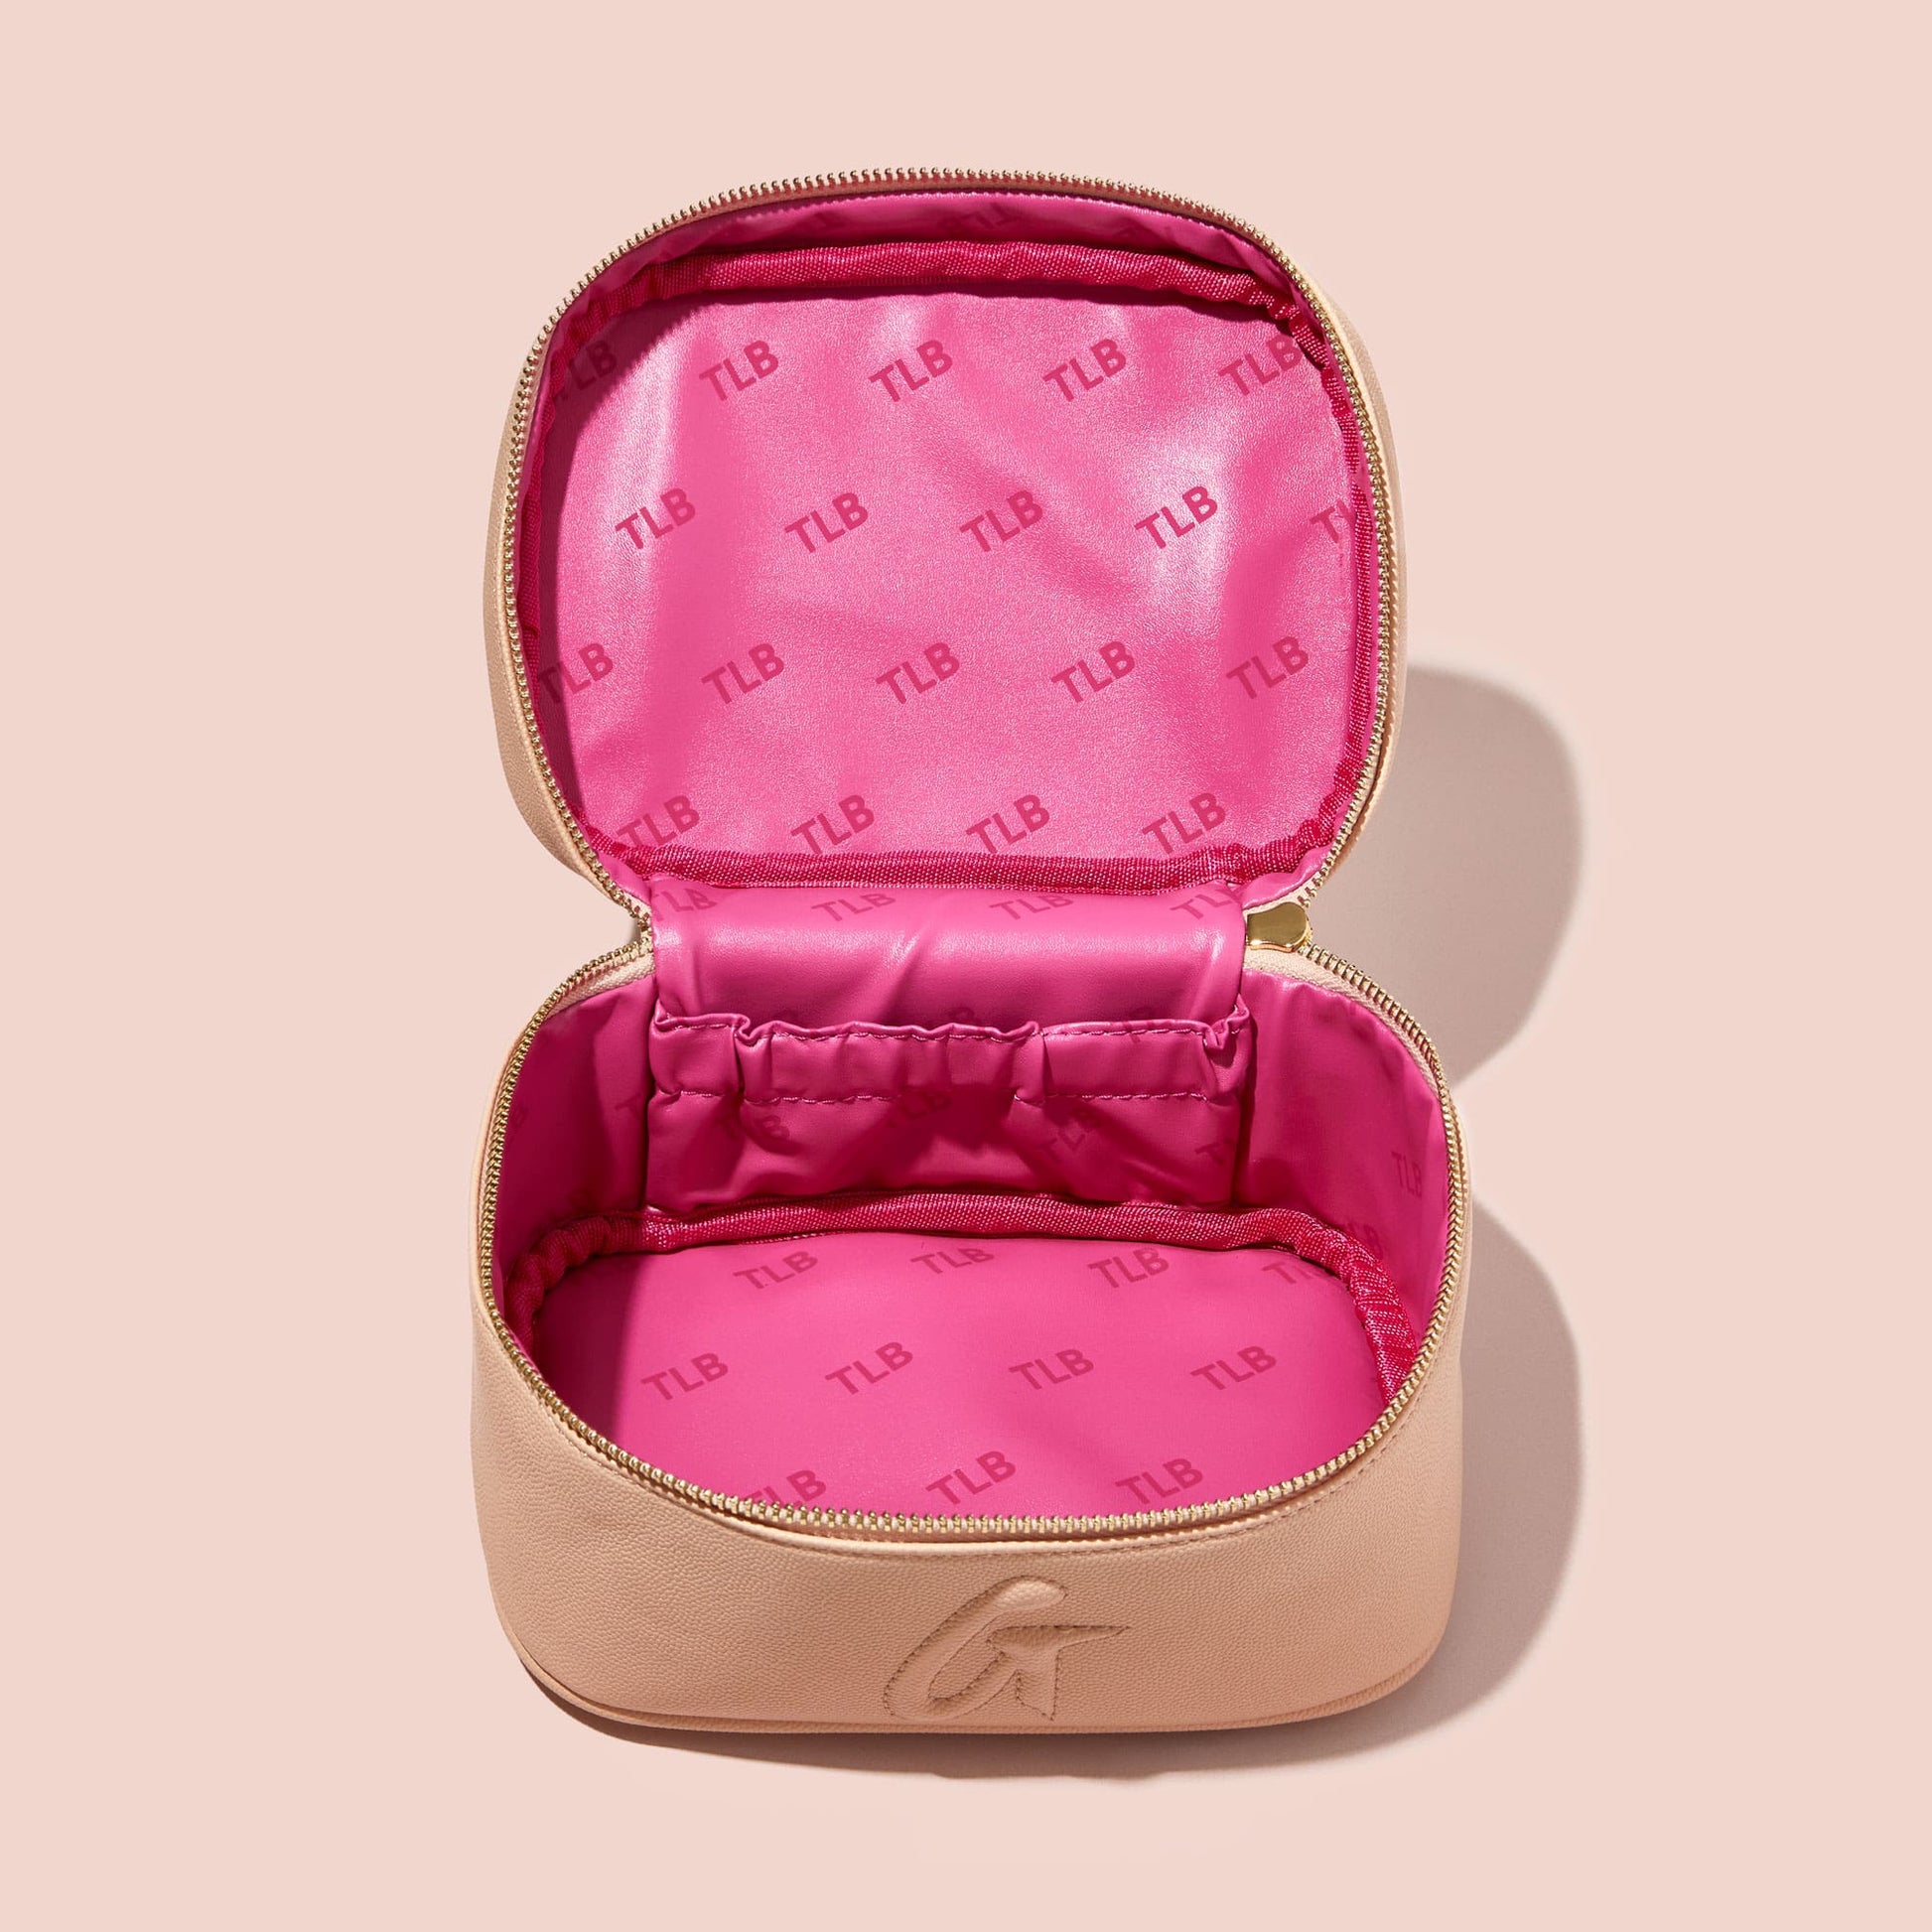 Generic Case Purse Box With Mirror - Women Lip Pink @ Best Price Online |  Jumia Kenya